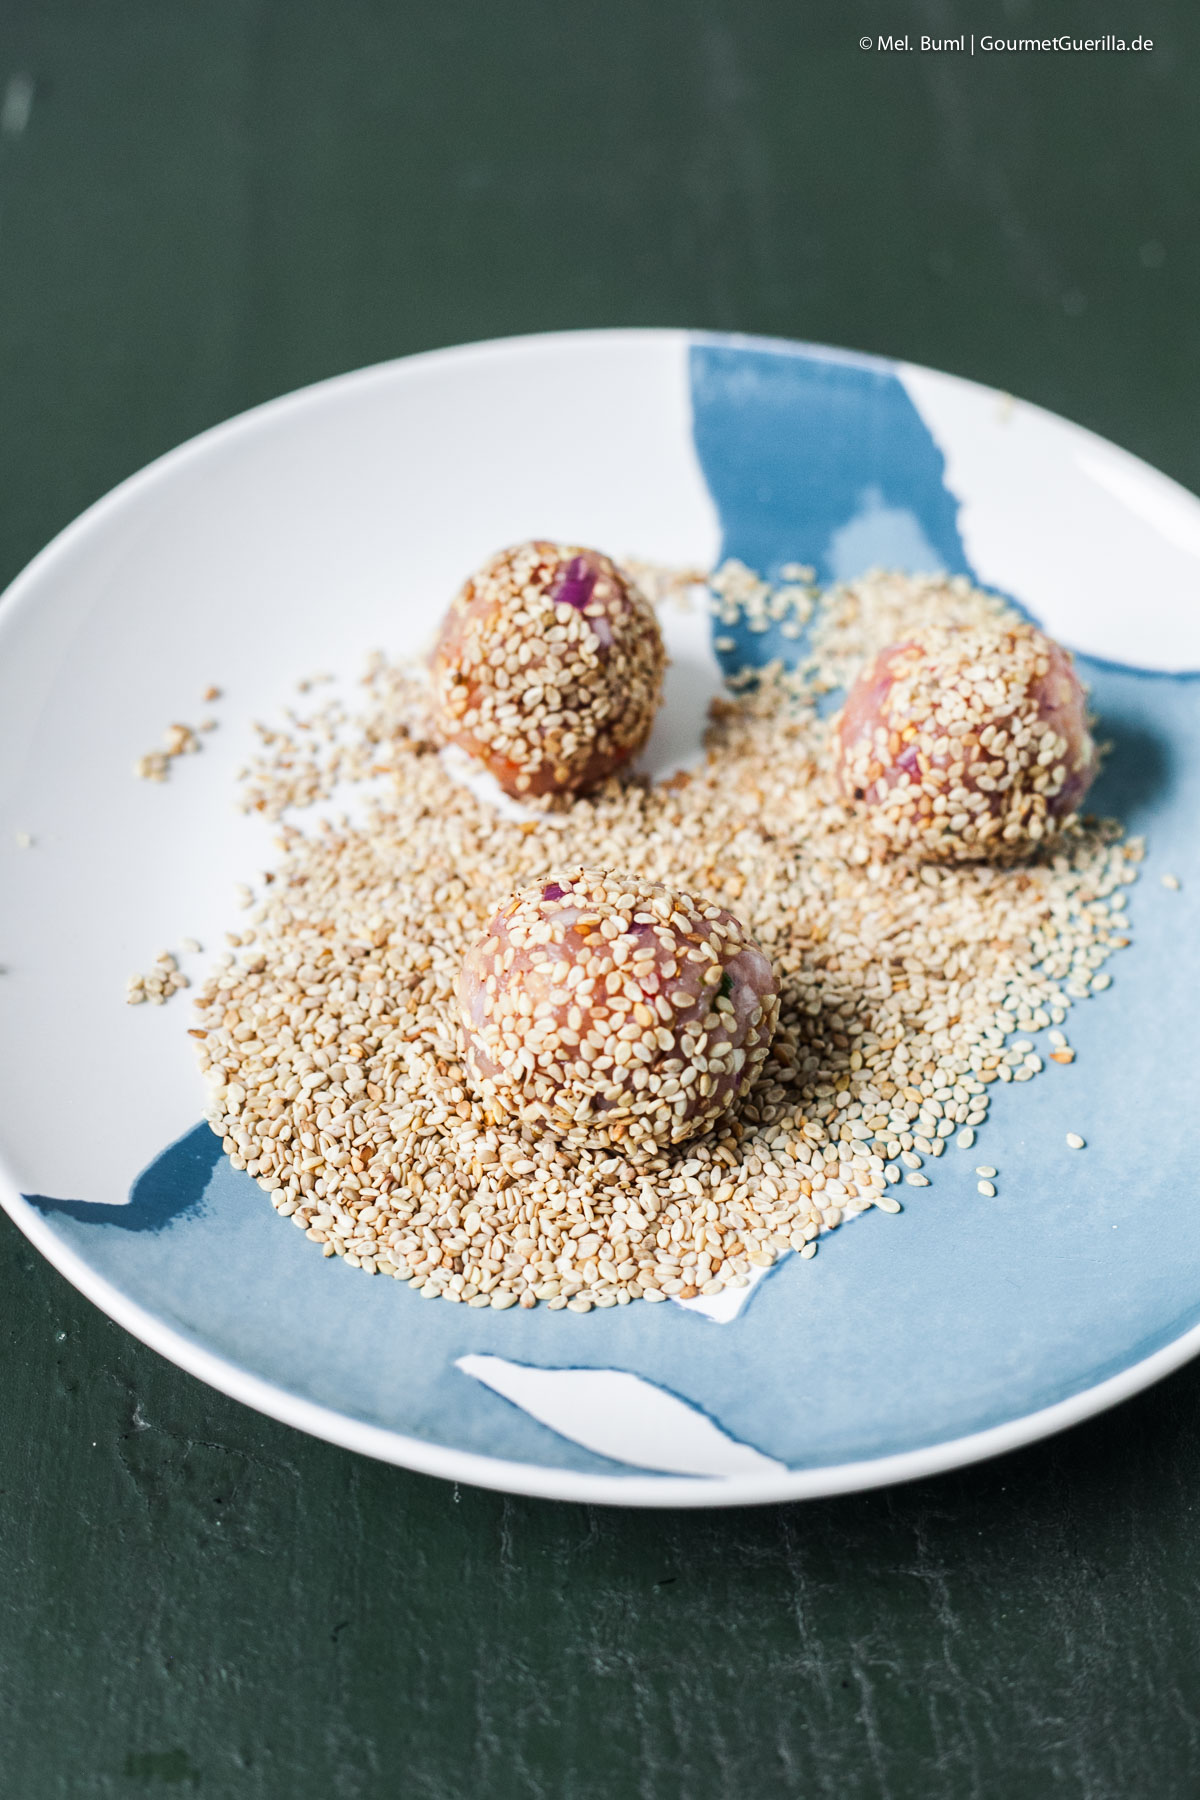  Make asian meatballs yourself | GourmetGuerilla.com 